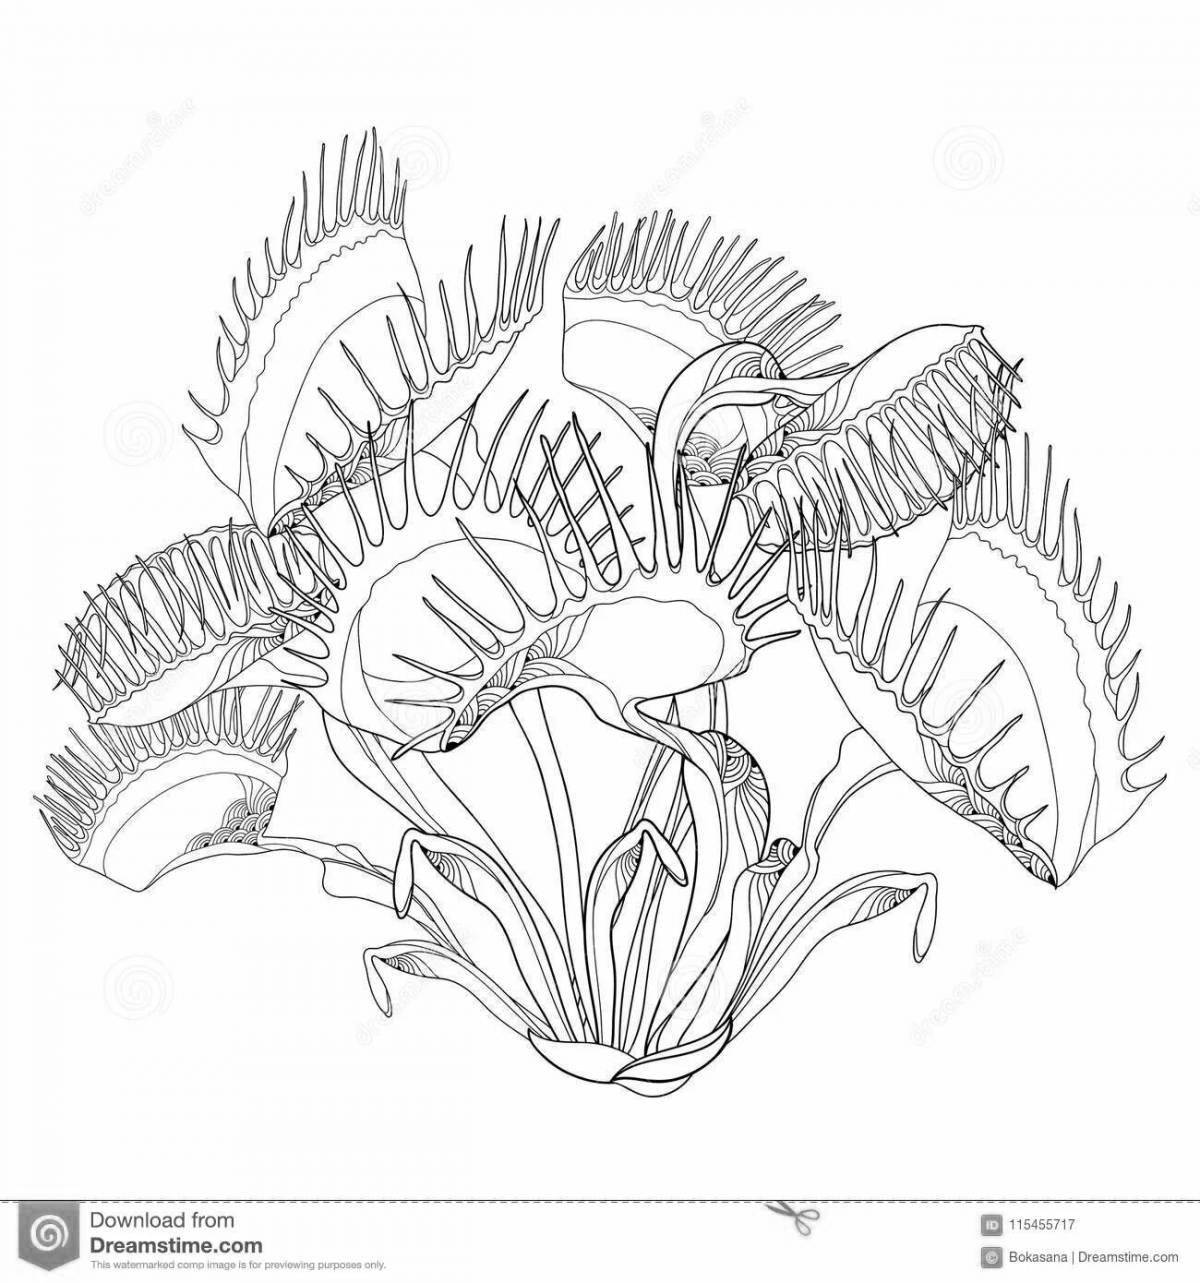 Adorable carnivorous plants coloring page